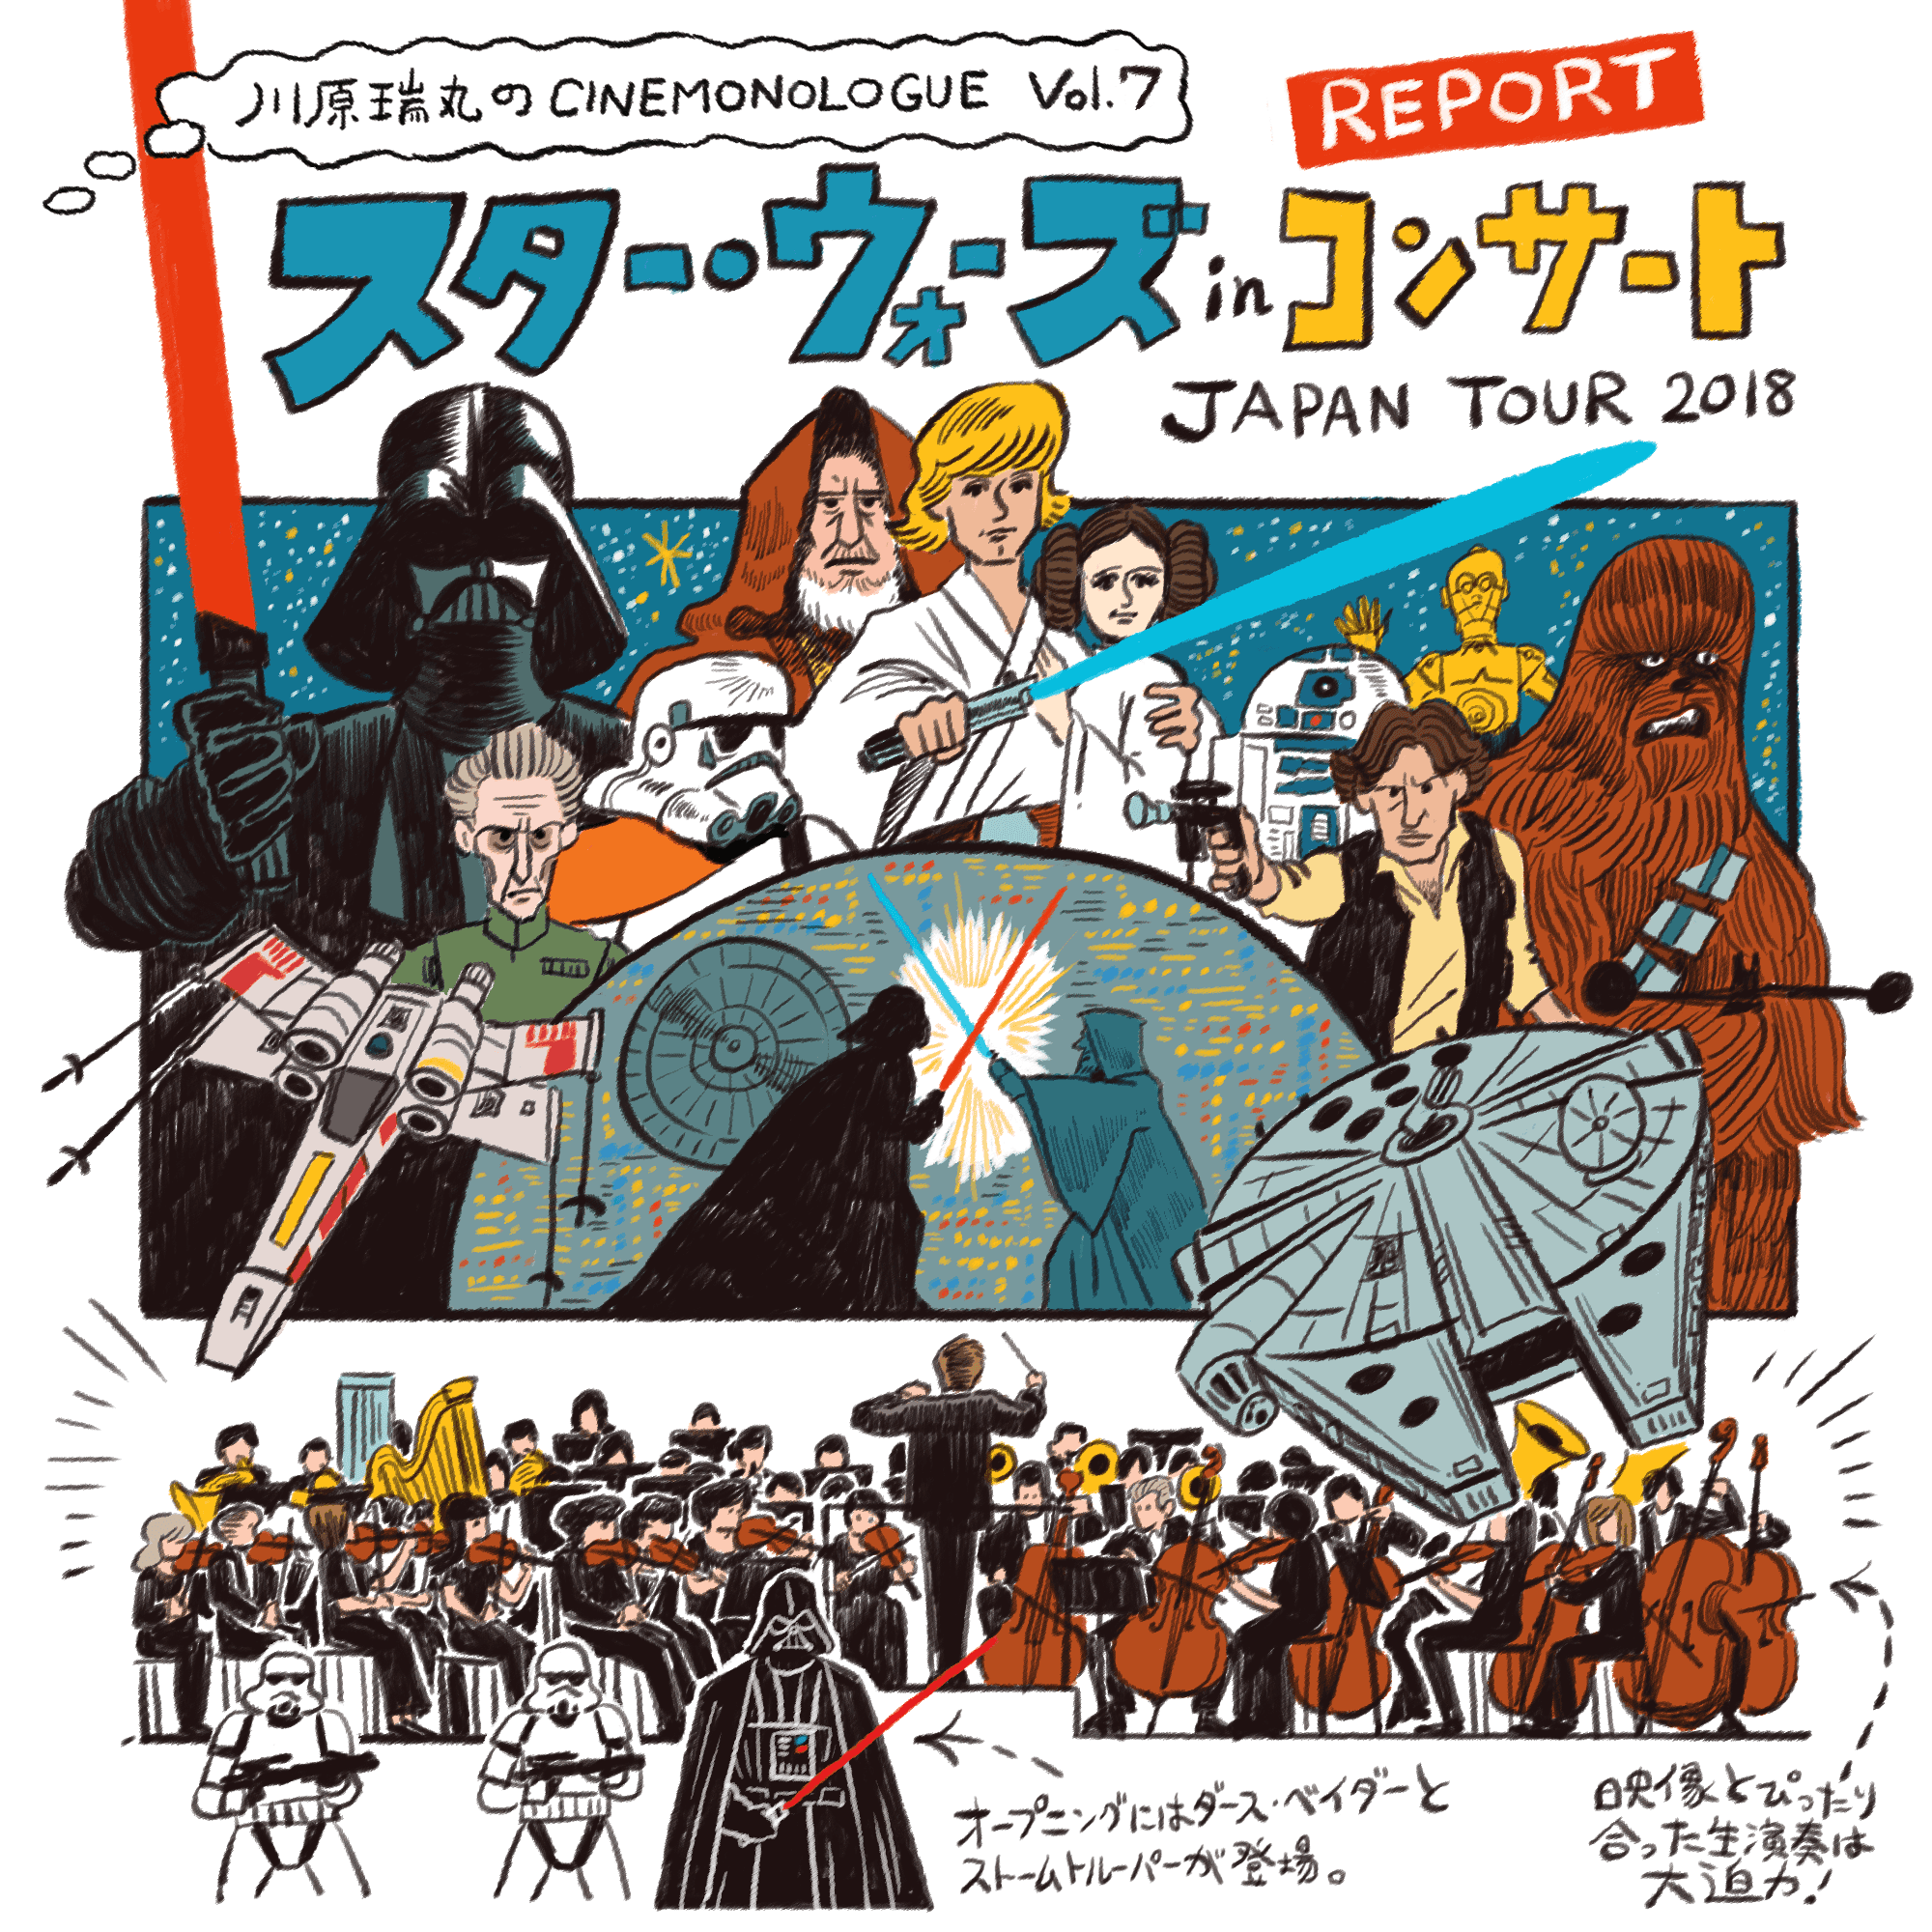 Star Wars in Concert Japan Tour 2018 - Report [Mizumaru Kawahara's CINEMONOLOGUE Vol.7]